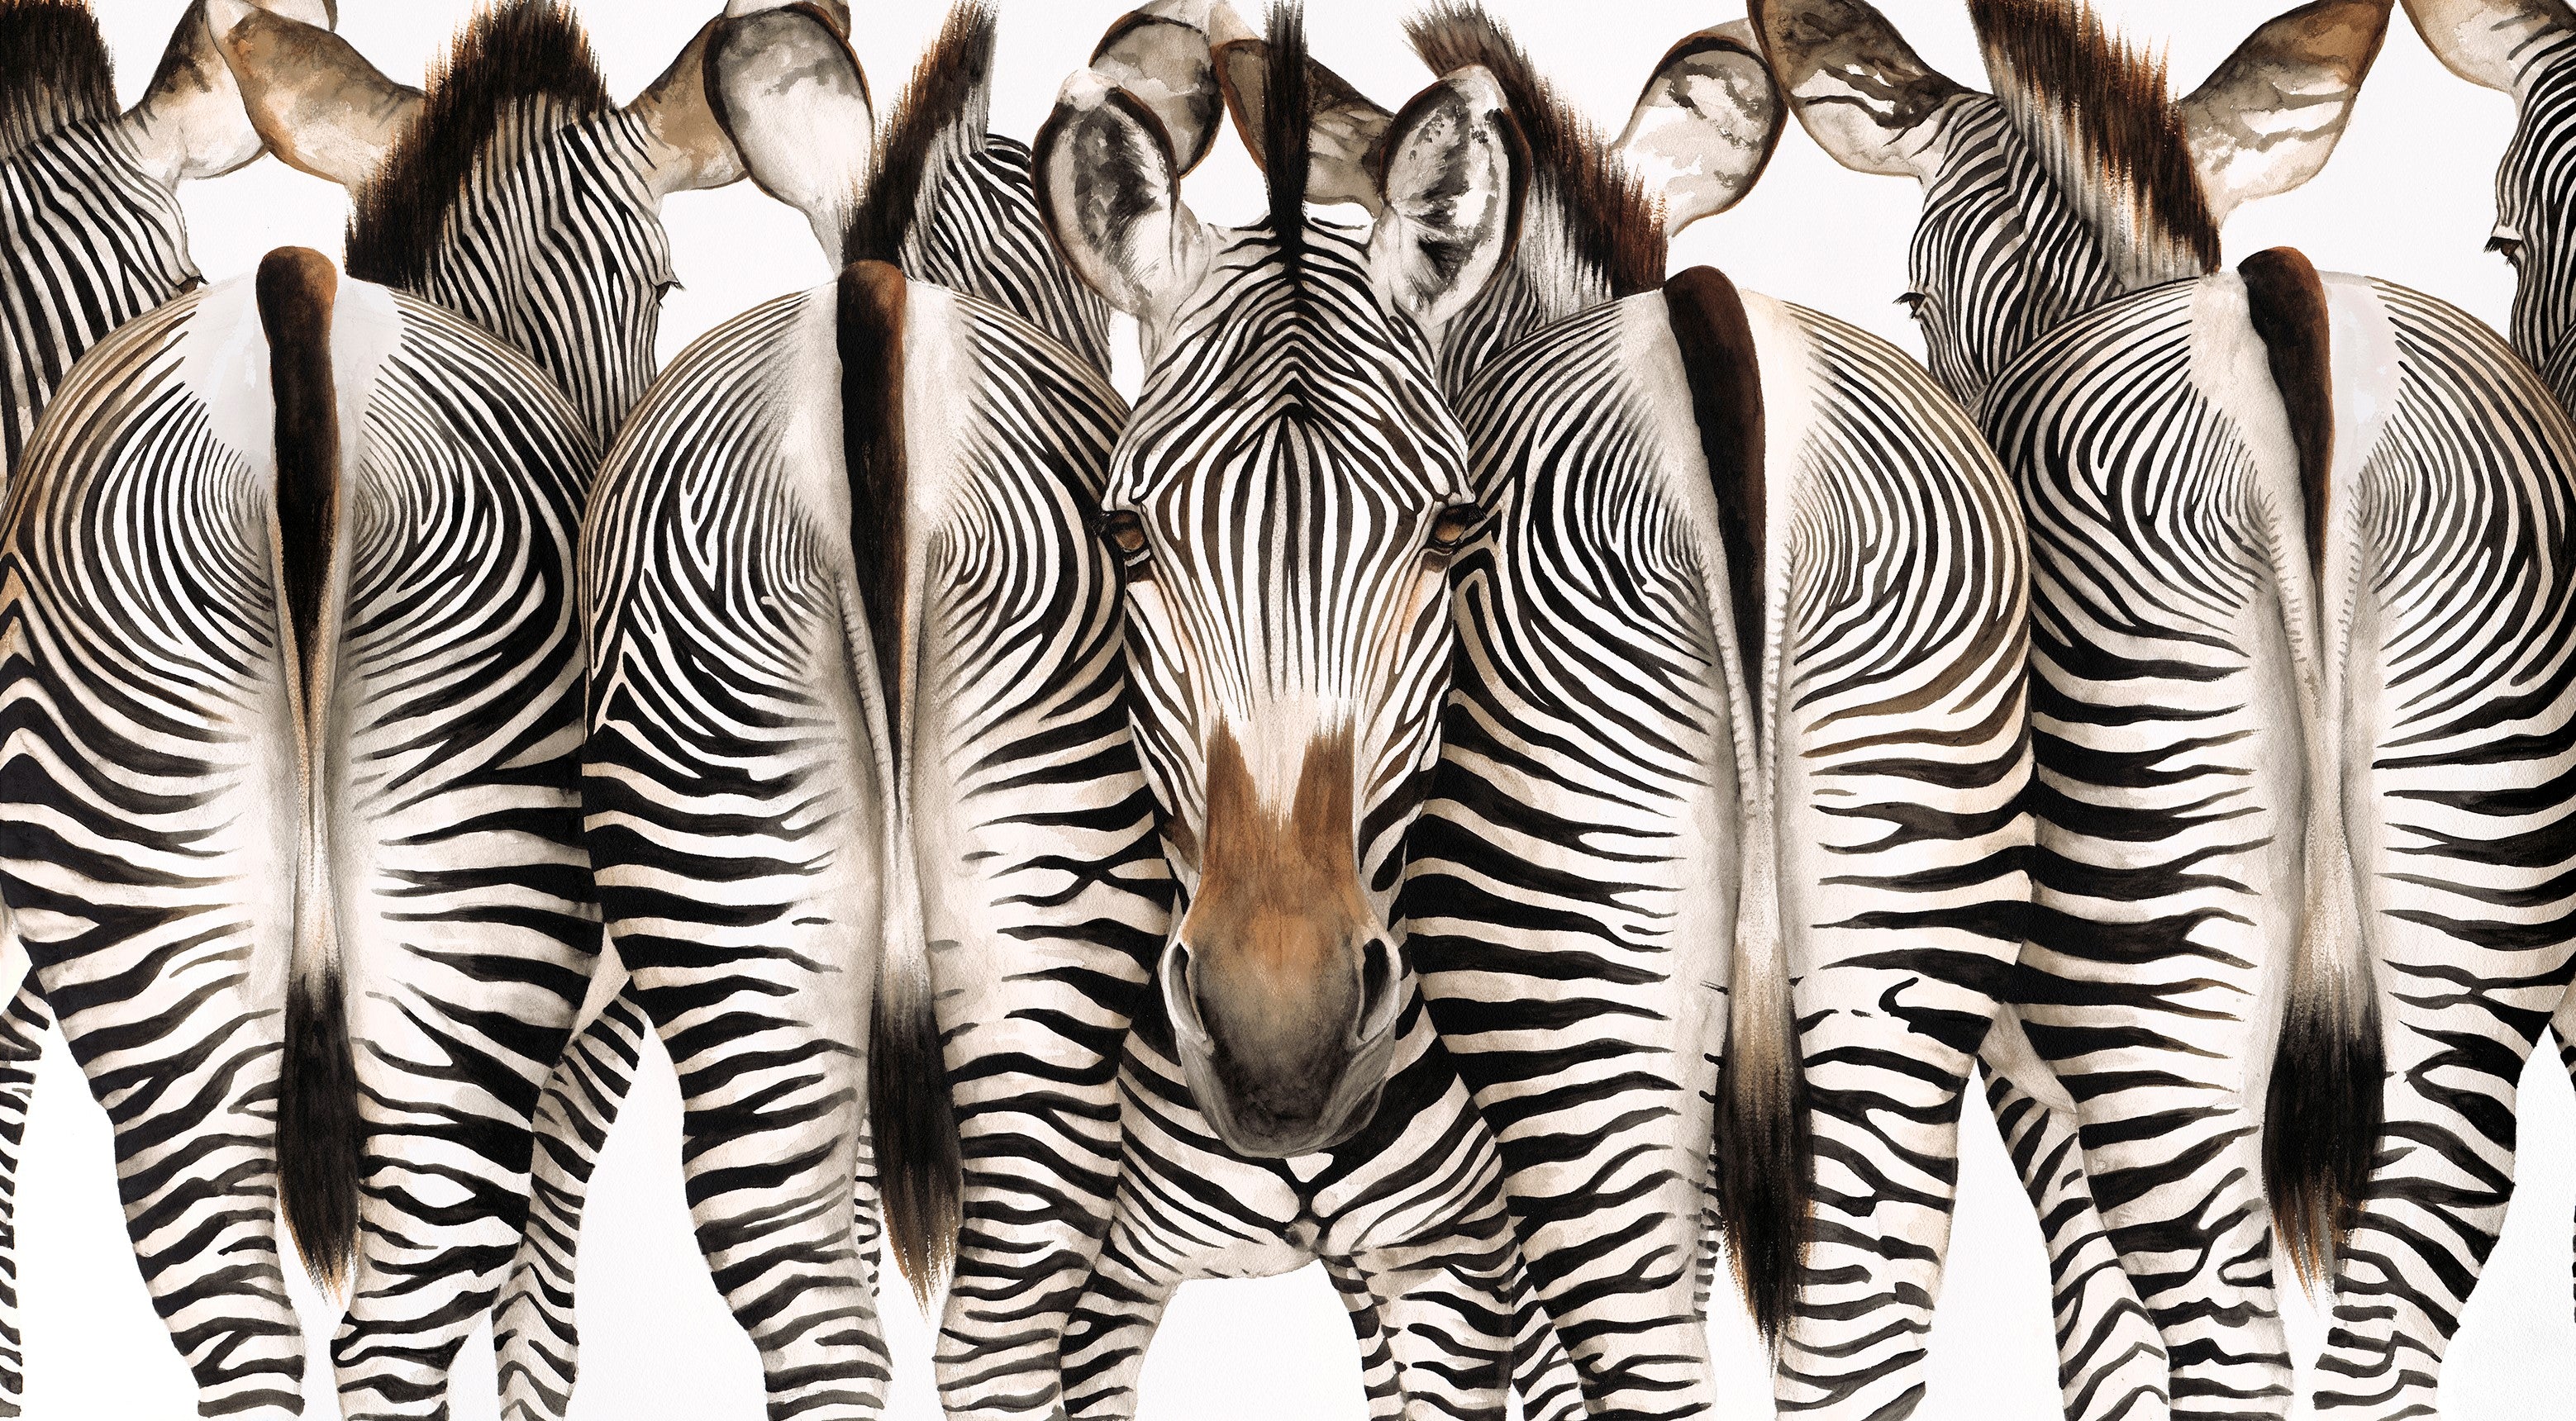 Dominique Salm Cheek To Cheek Zebras canvas